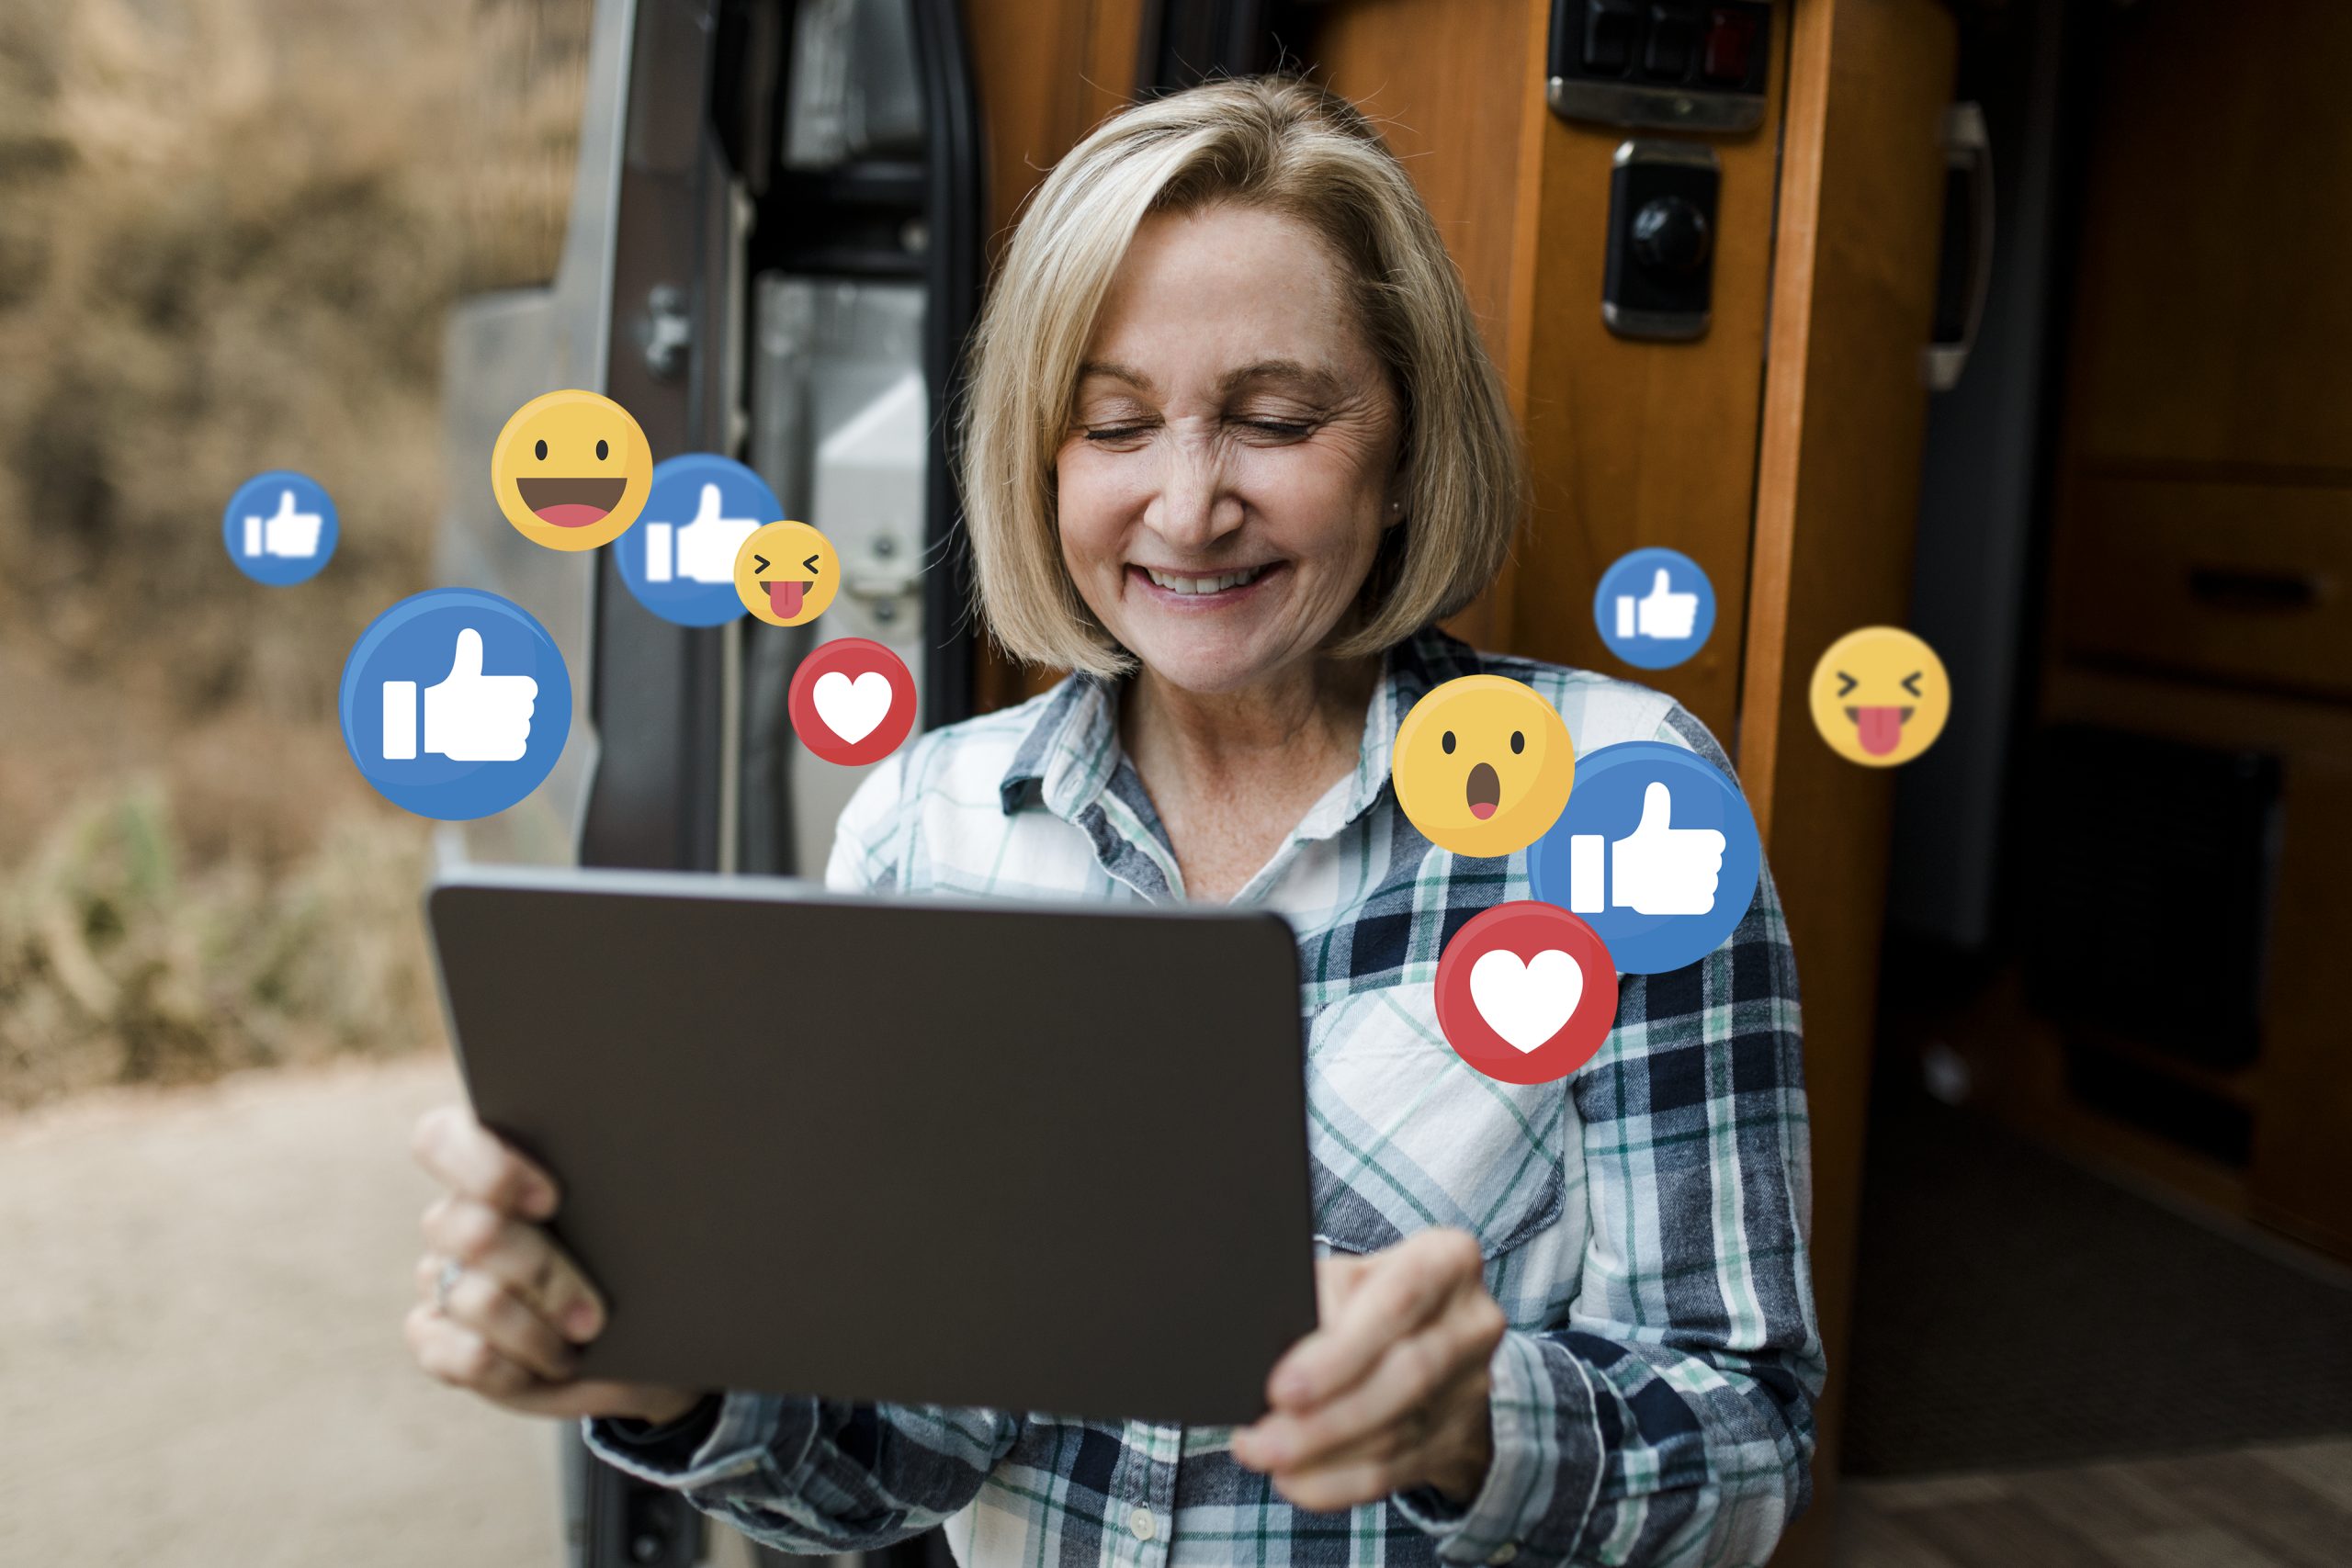 Woman enjoying social media browsing on tablet with social media reaction symbols around her